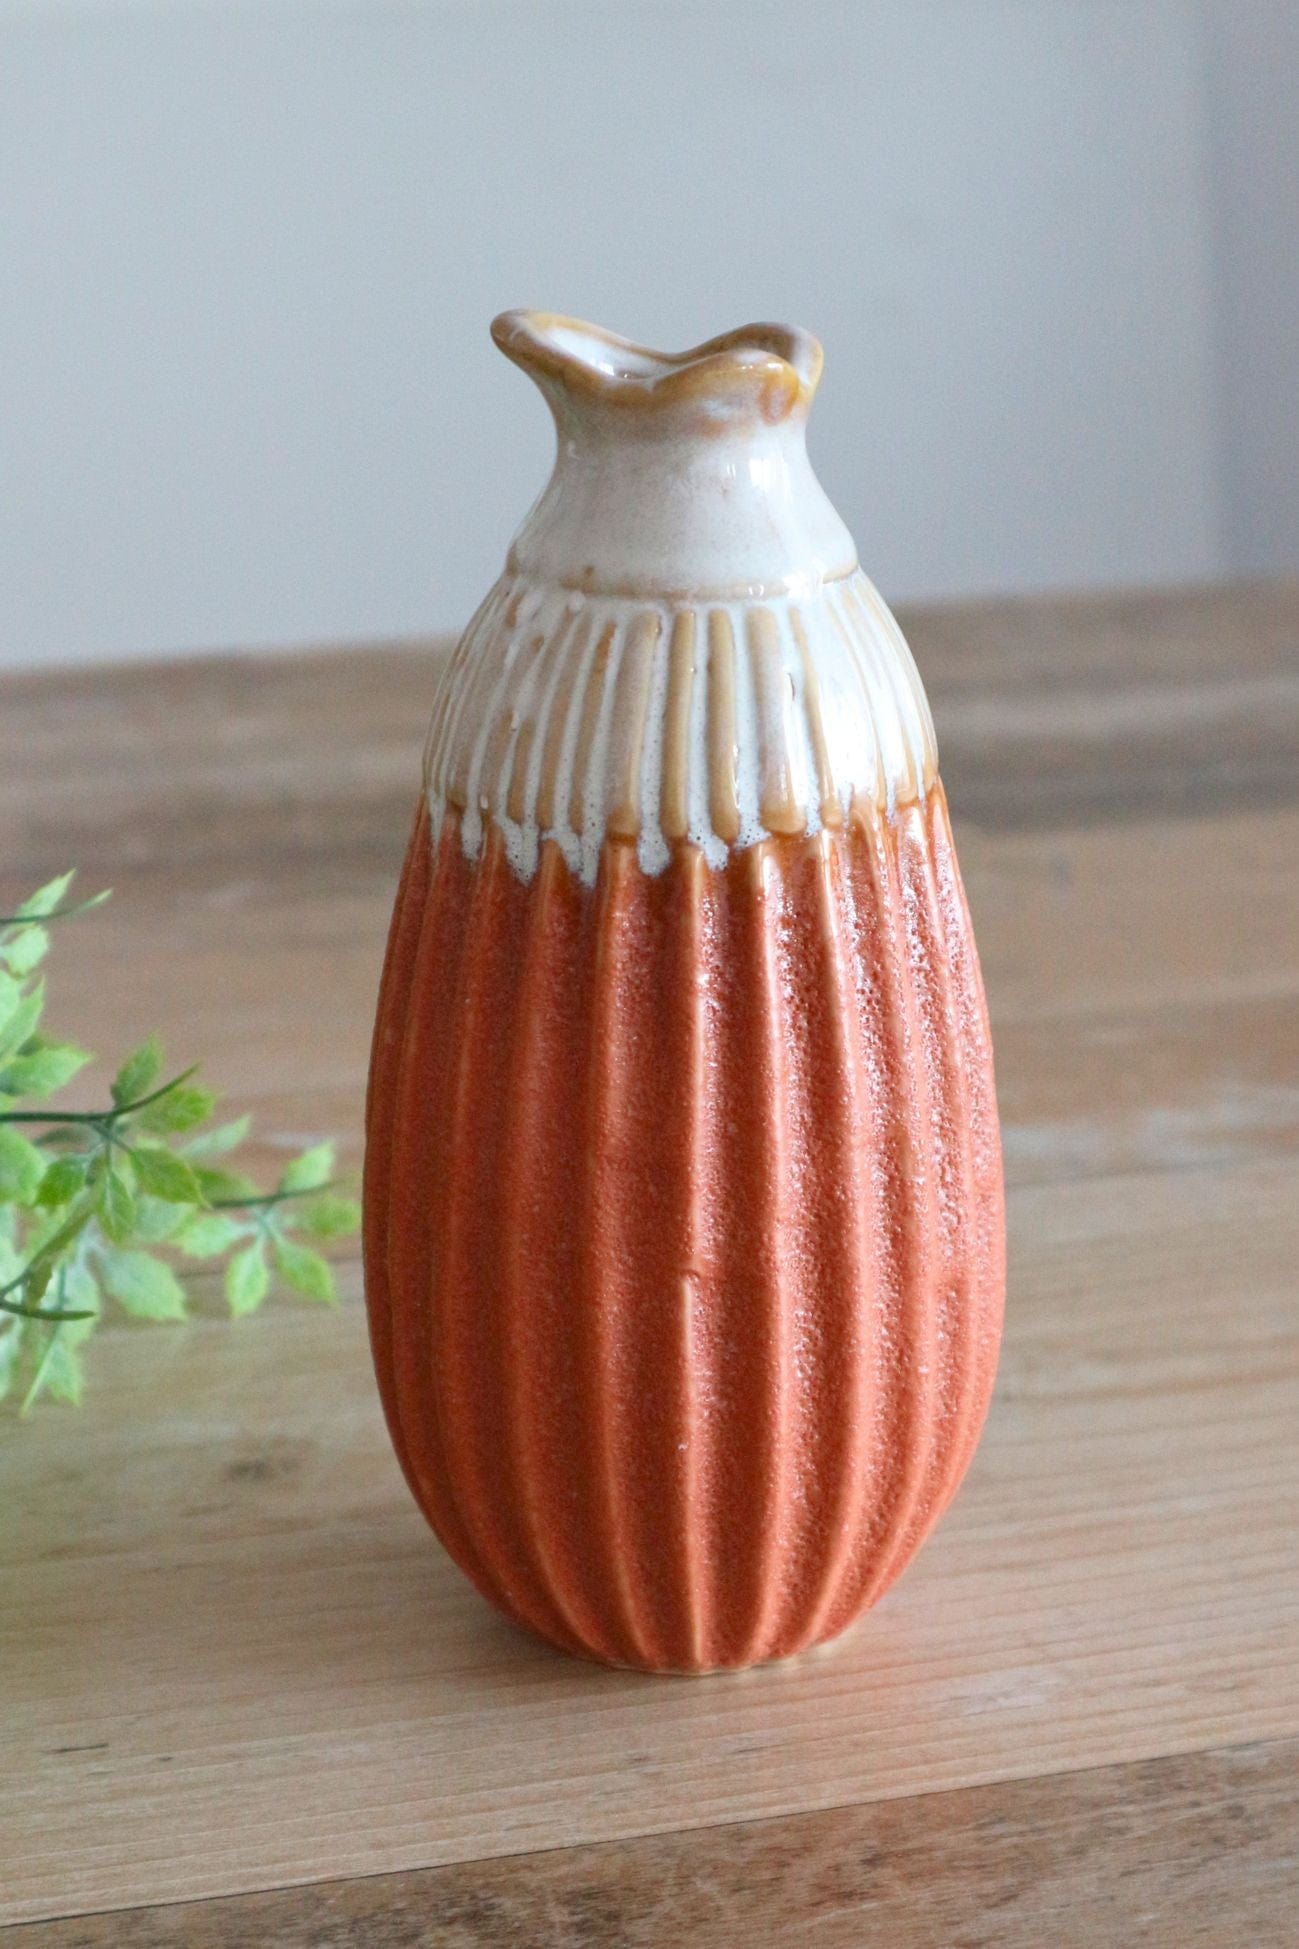 Item International Jaul Jaul - Vaso sfumato in ceramica in stile etnico | Item International